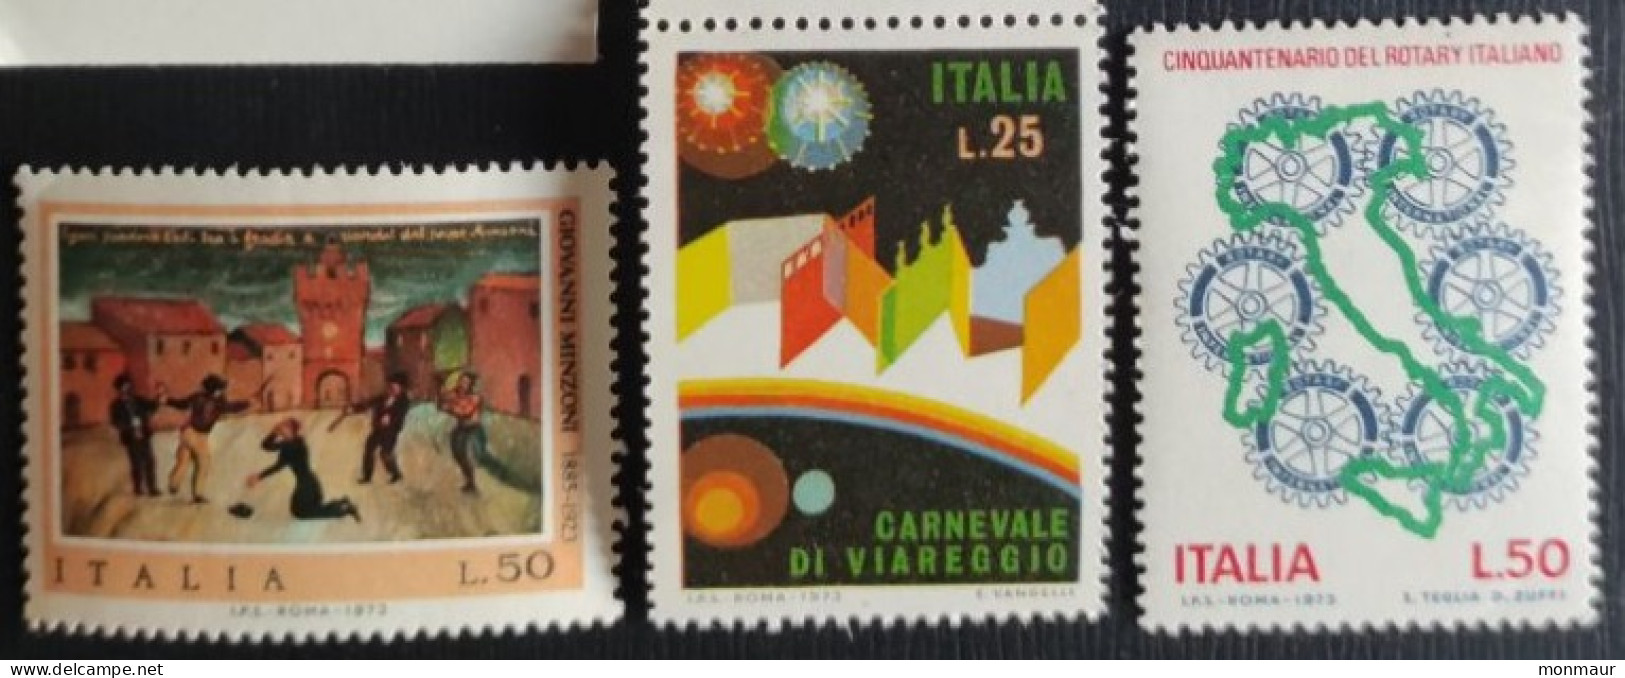 ITALIA 1973  MINZONI-CARNEVALE DI VIAREGGIO-ROTARY ITALIANO - 1971-80: Mint/hinged